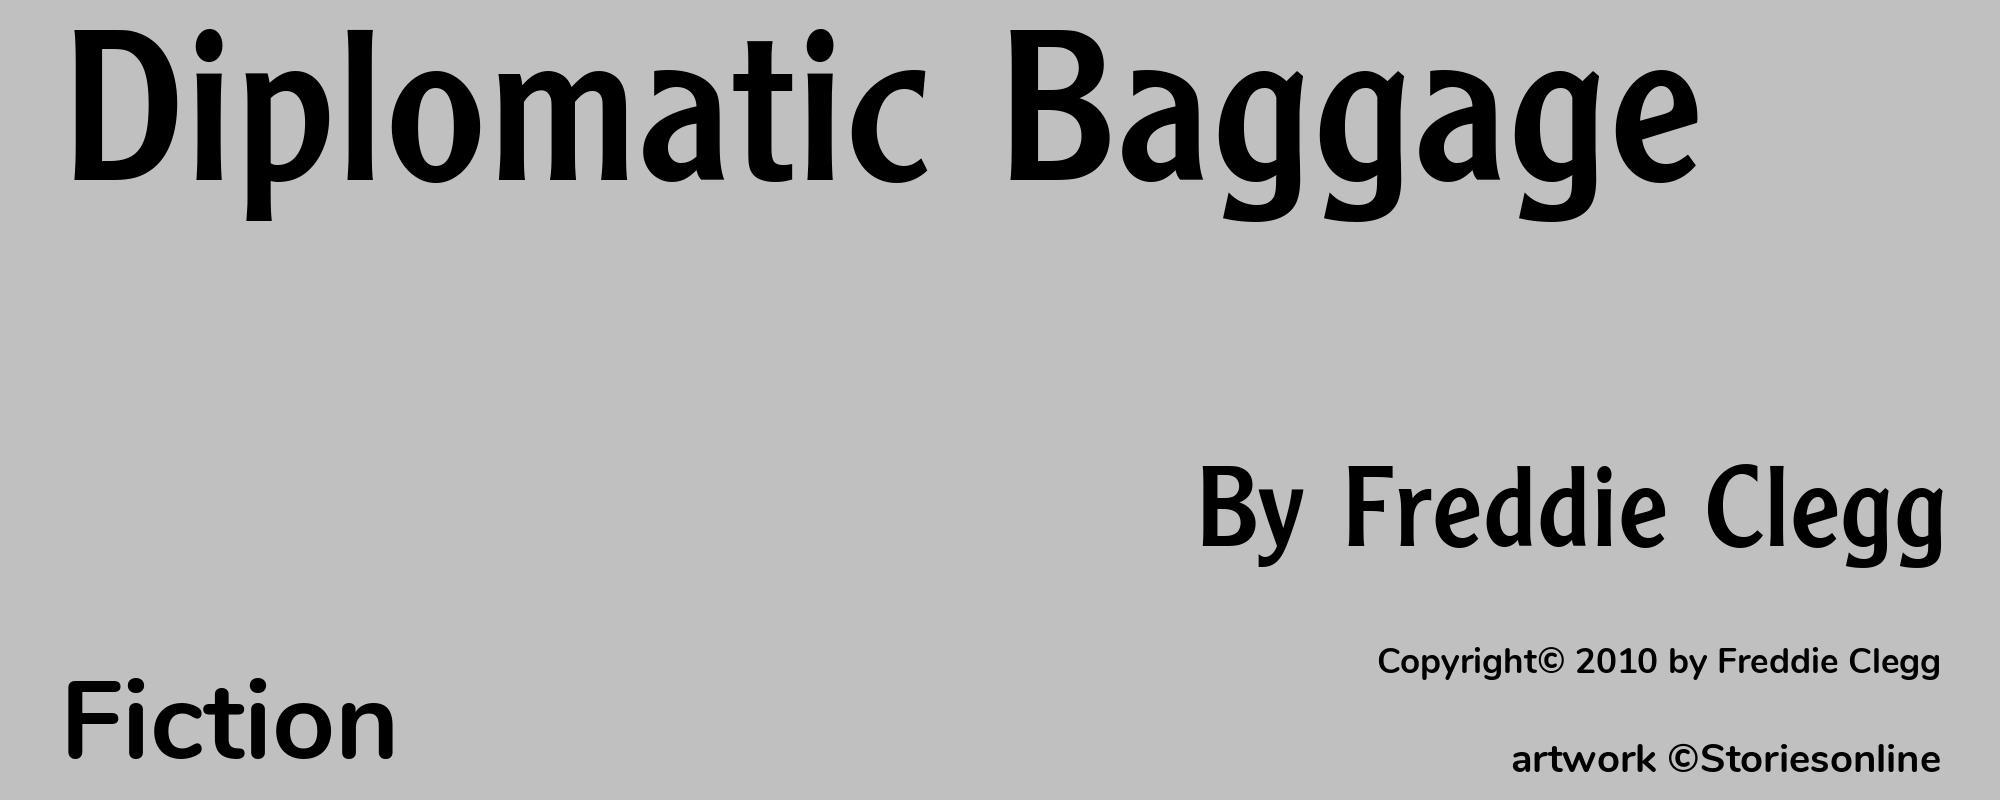 Diplomatic Baggage - Cover